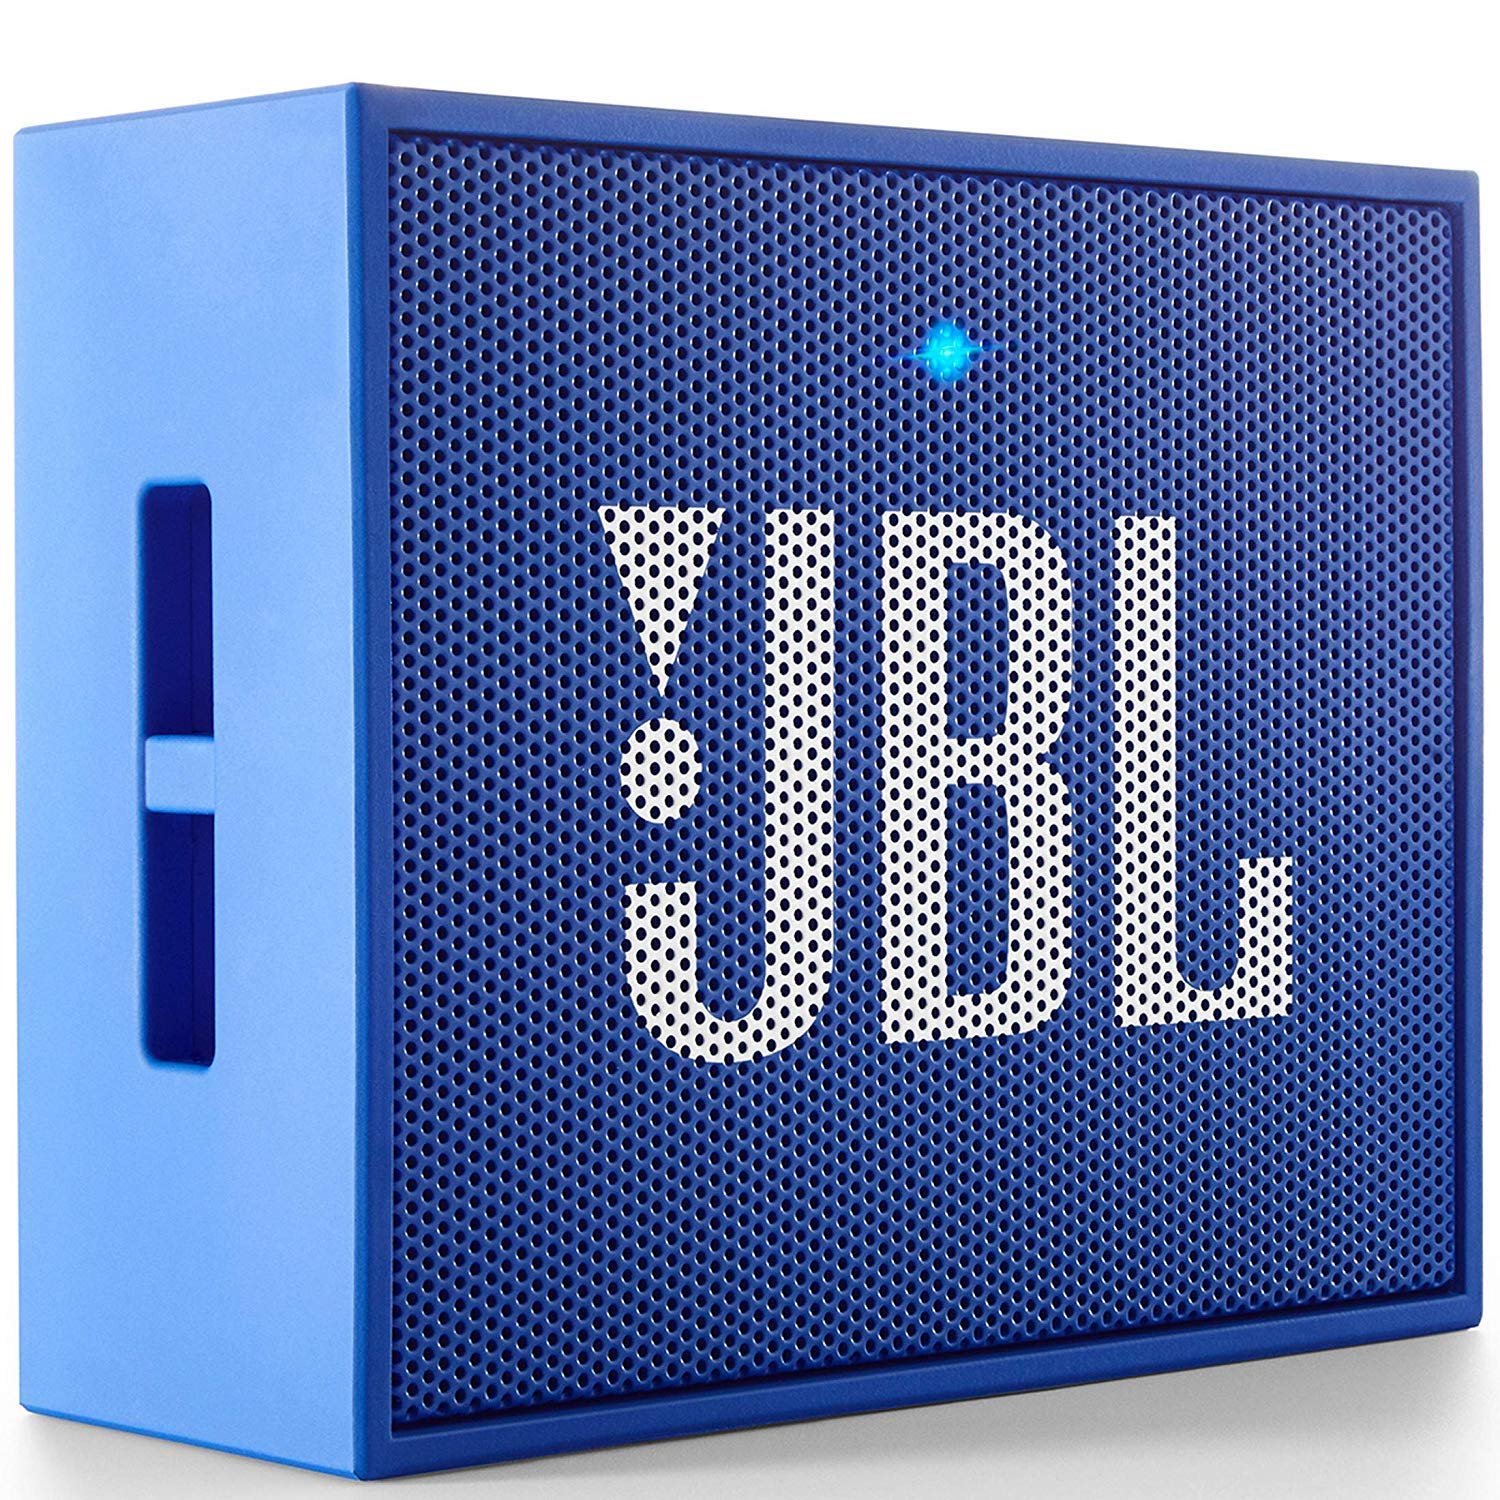 jbl speakers - gadgets for men- The dashing man